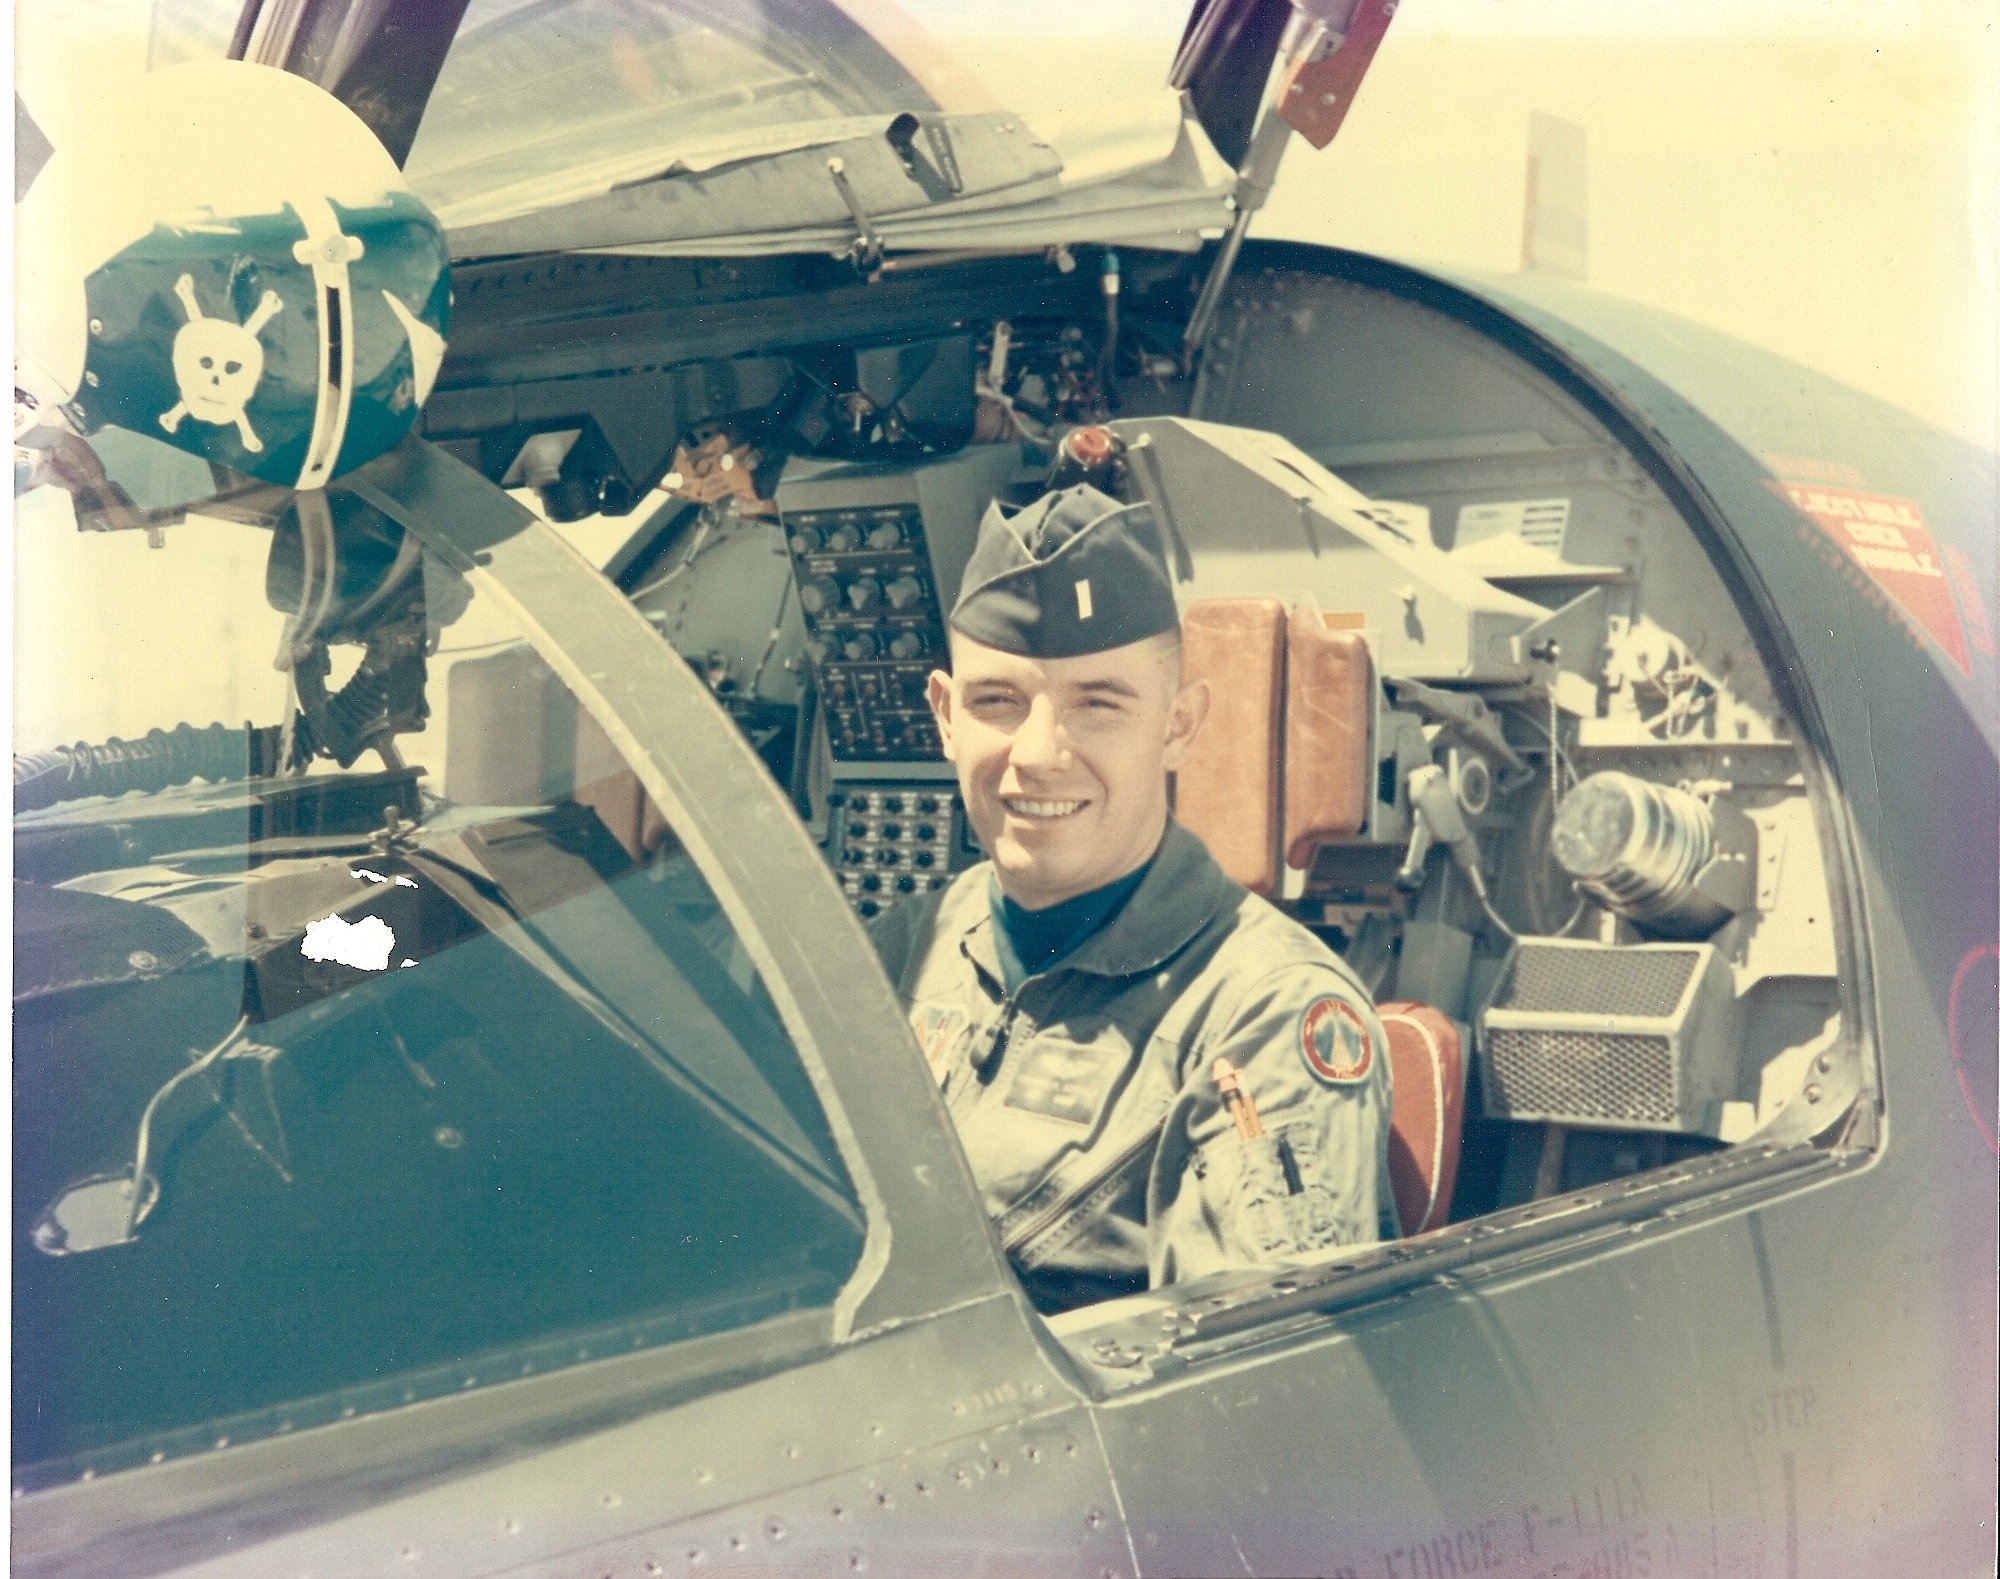 http://www.warbirdsnews.com/wp-content/uploads/2013/06/Arnie-Franklin-F-111.jpg